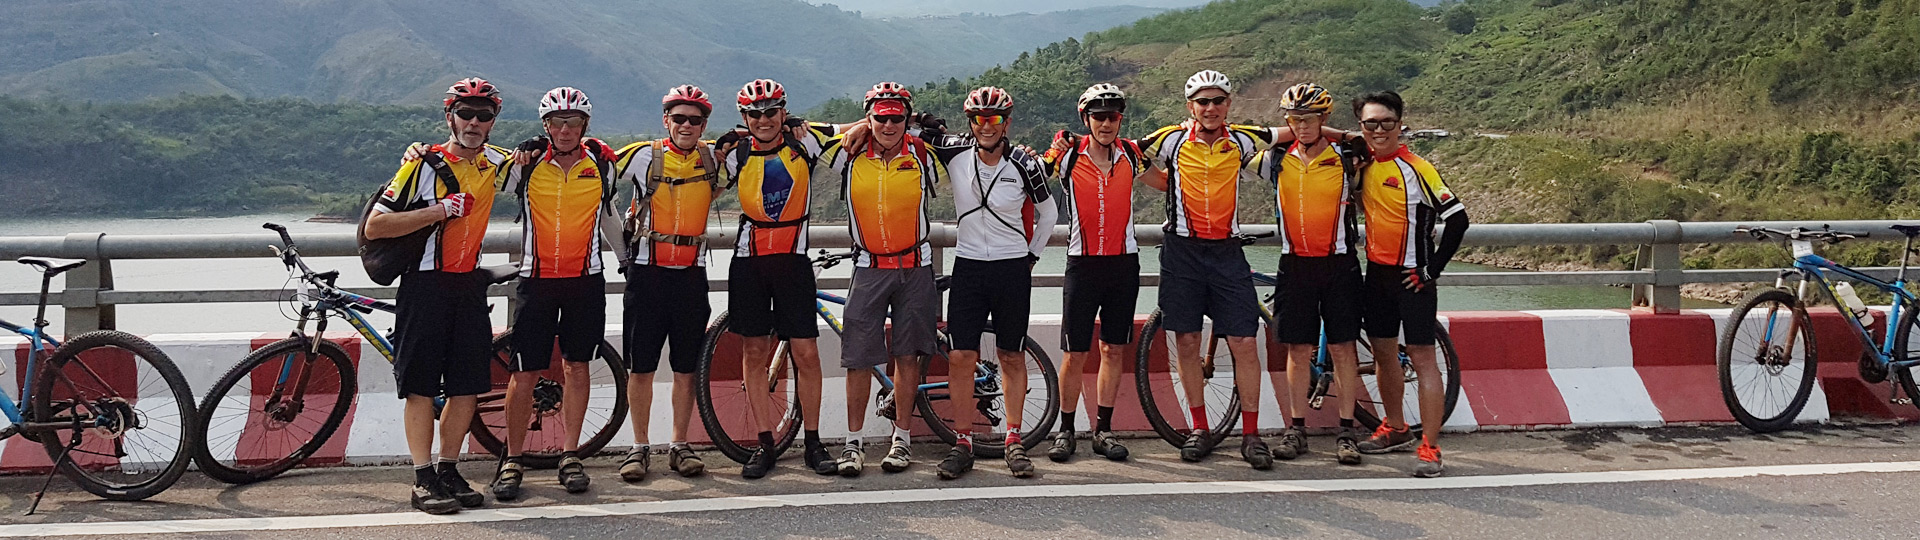 Luang Prabang Free and Easy Cycling Tour -3 days